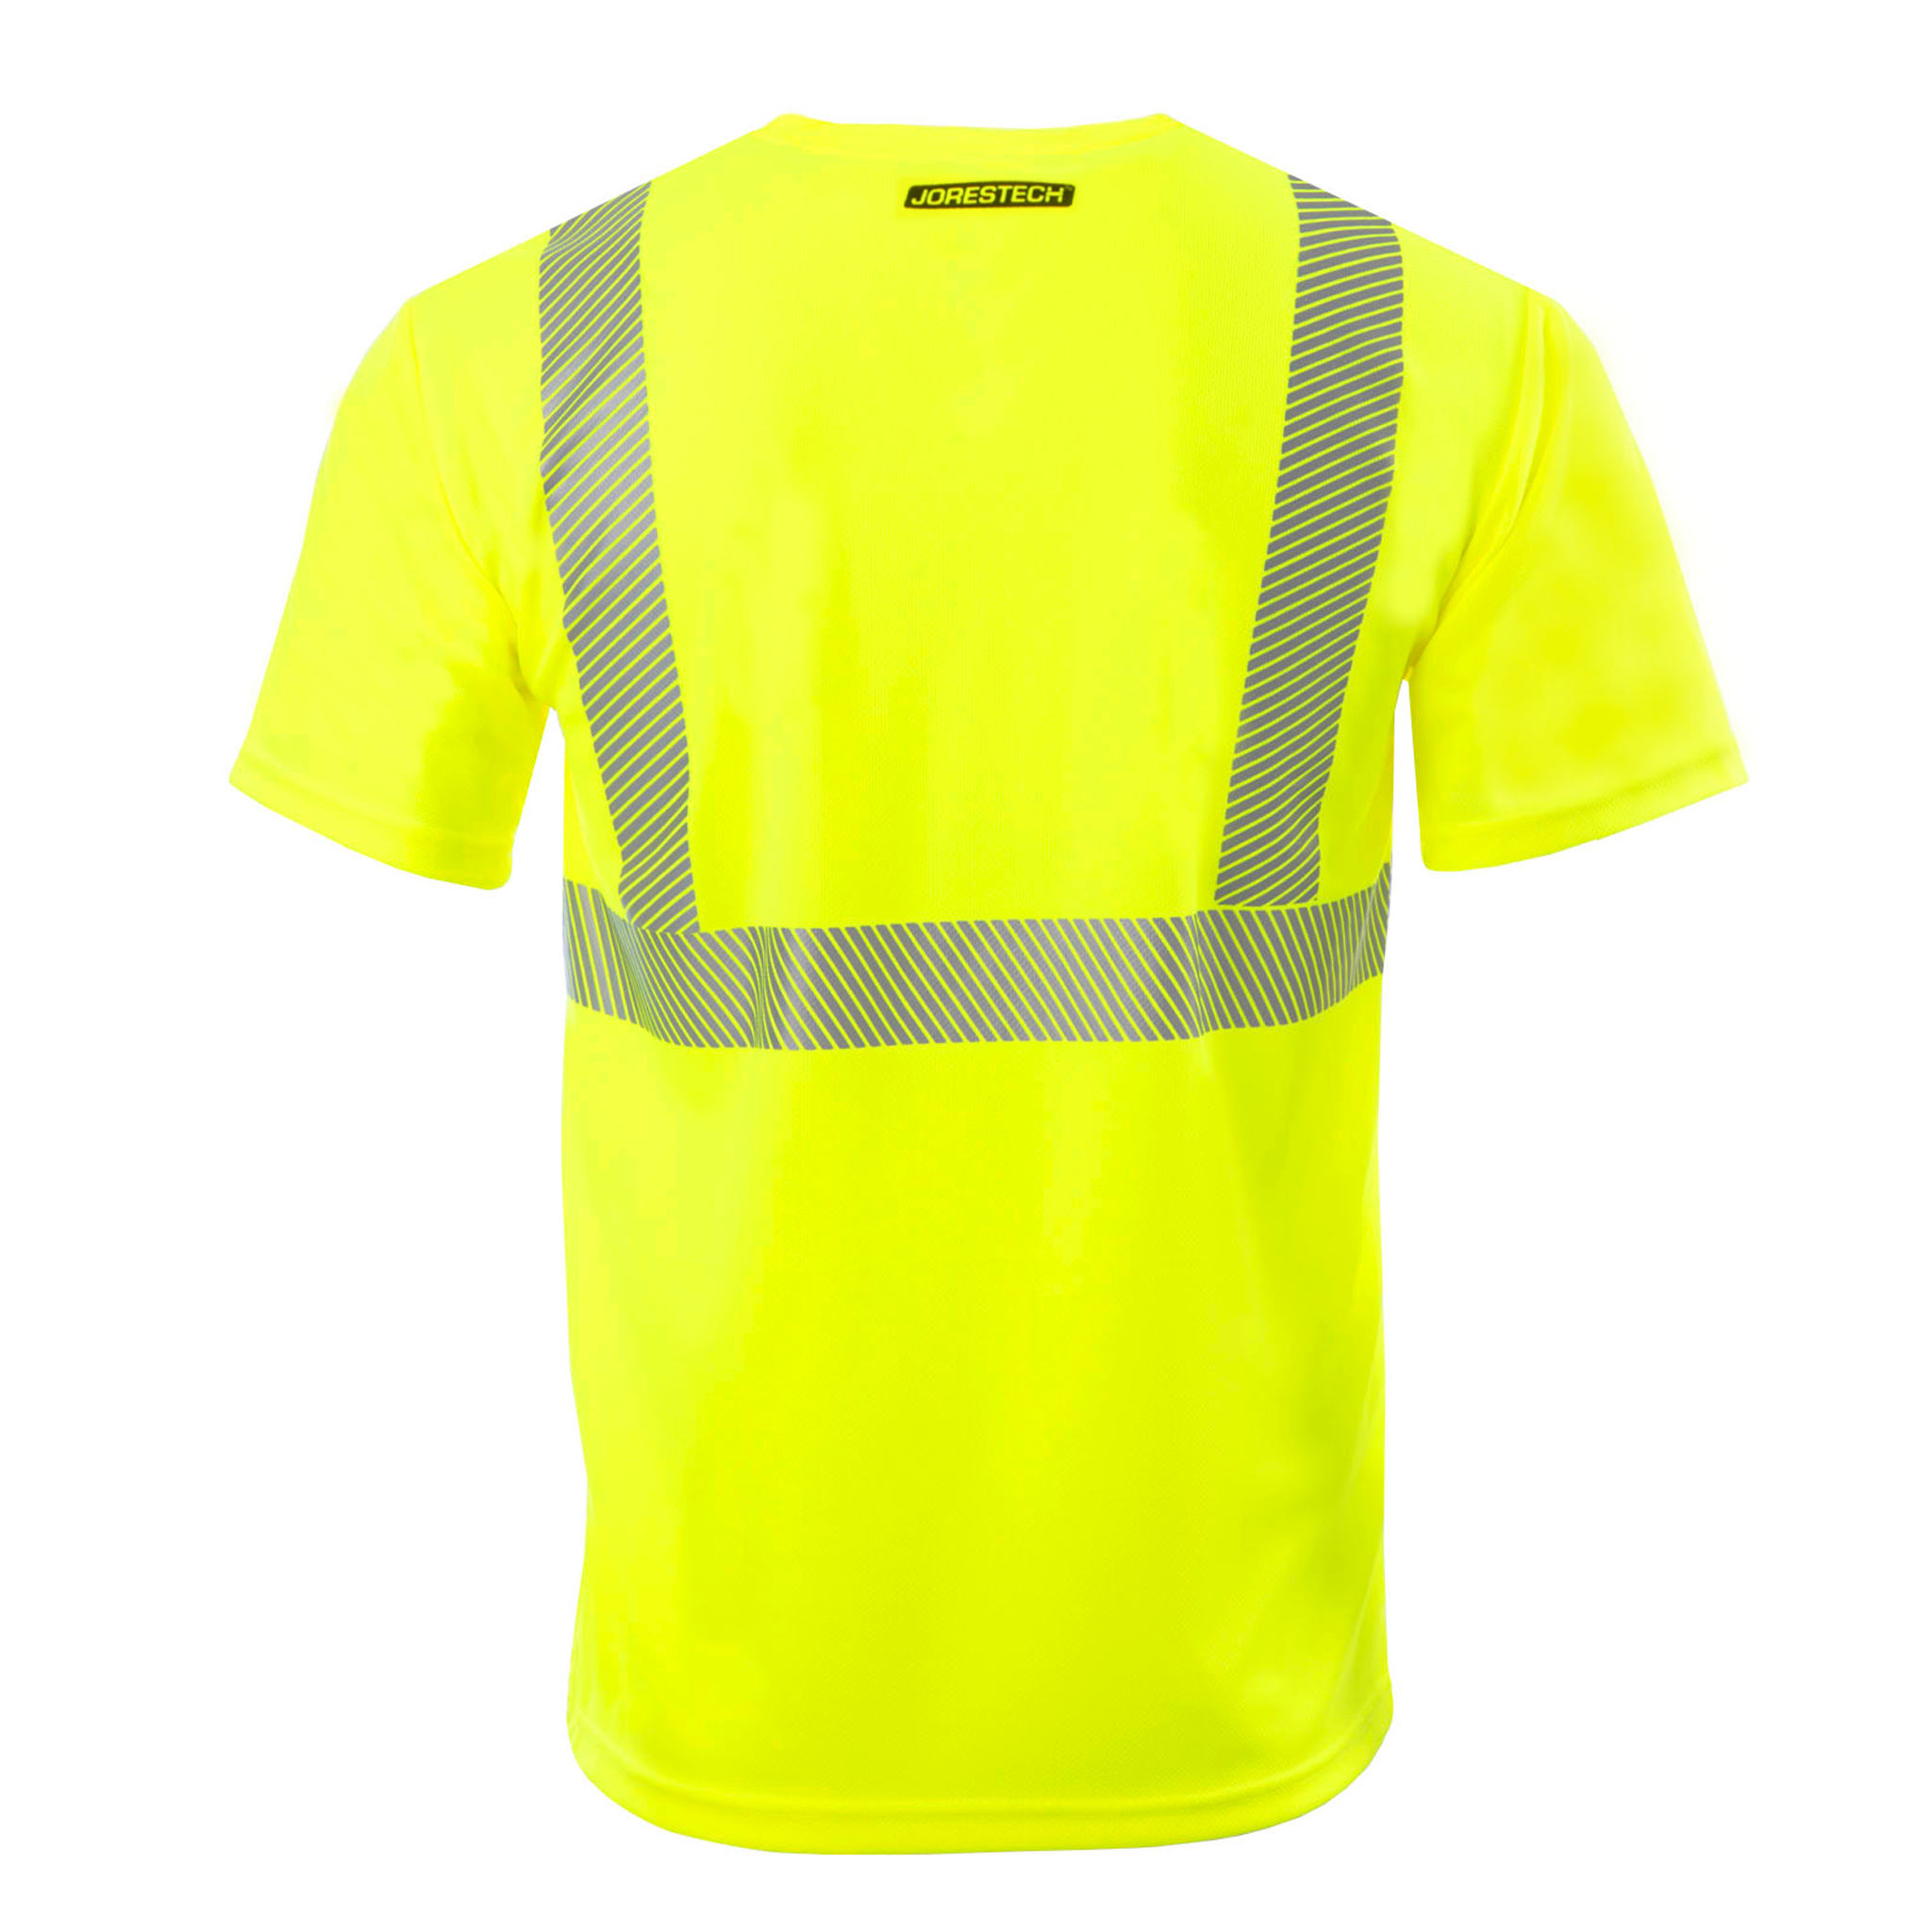 JORESTECH Hi-Vis Safety Rain Pants, ANSI Class E (Yellow/Black, 2XL)